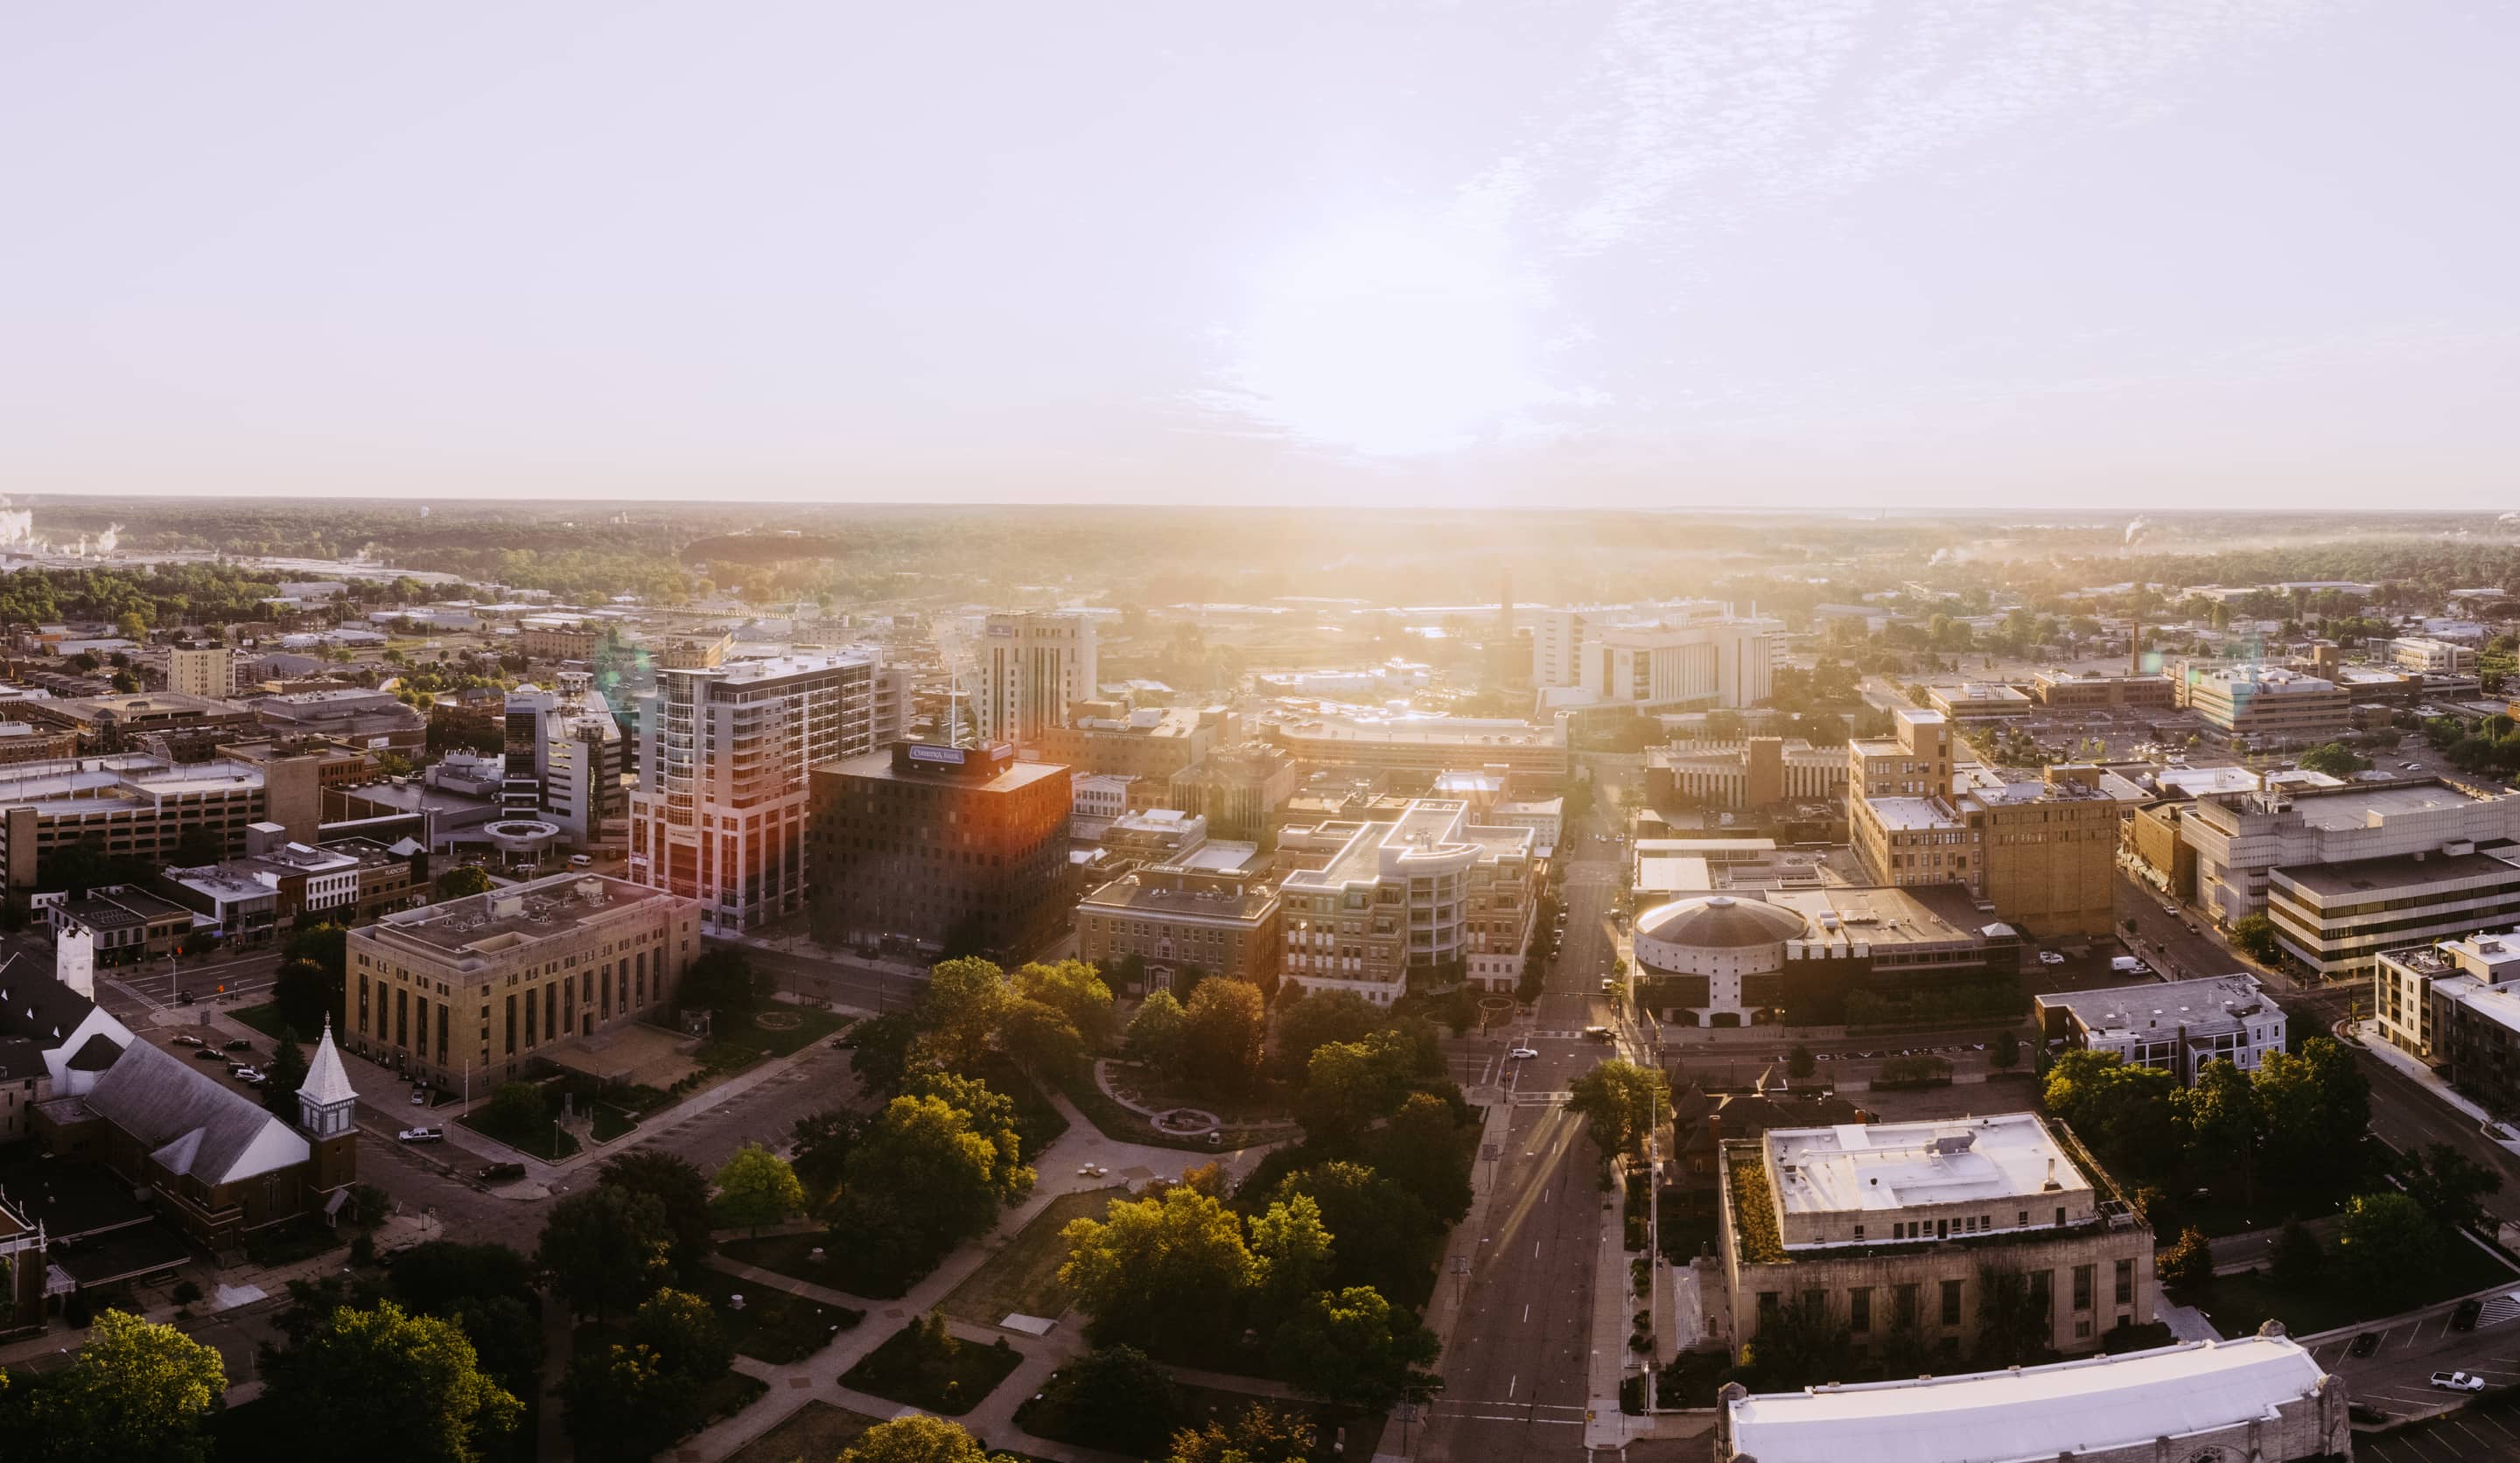  aerial image of downtown Kalamazoo